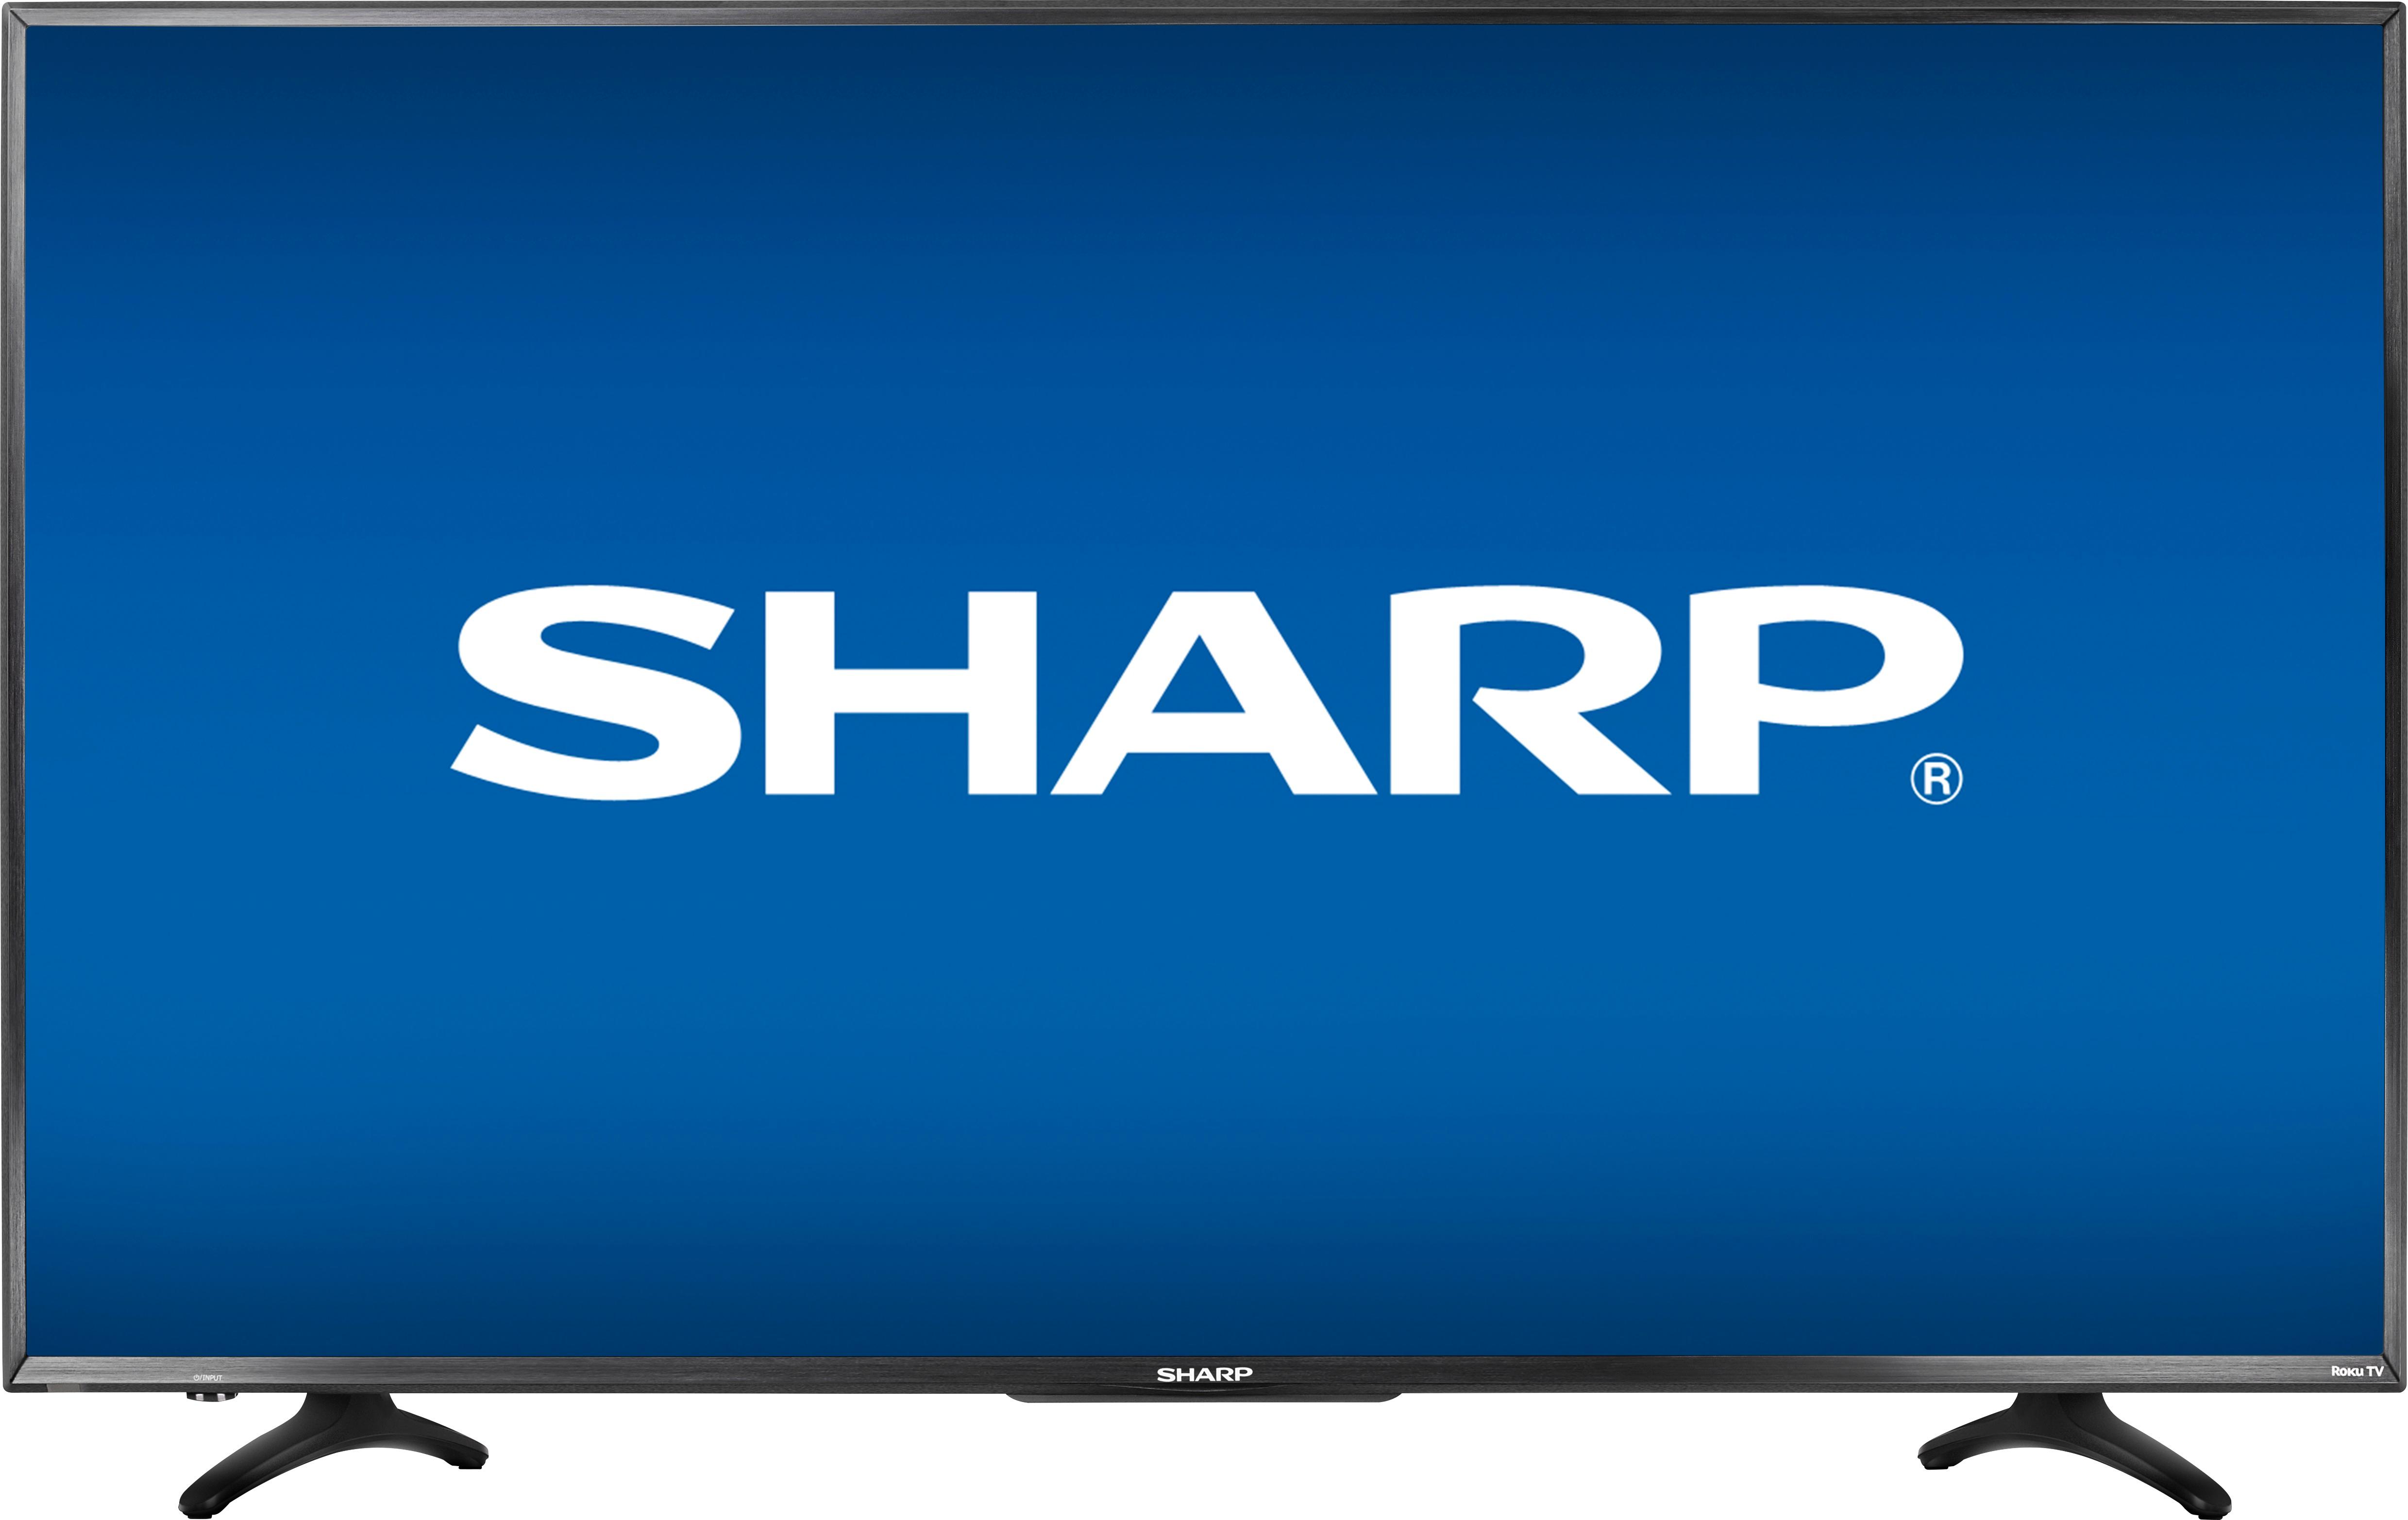 LC-55Q7030U 2160p Sharp 55" Class 4K Smart LED TV 